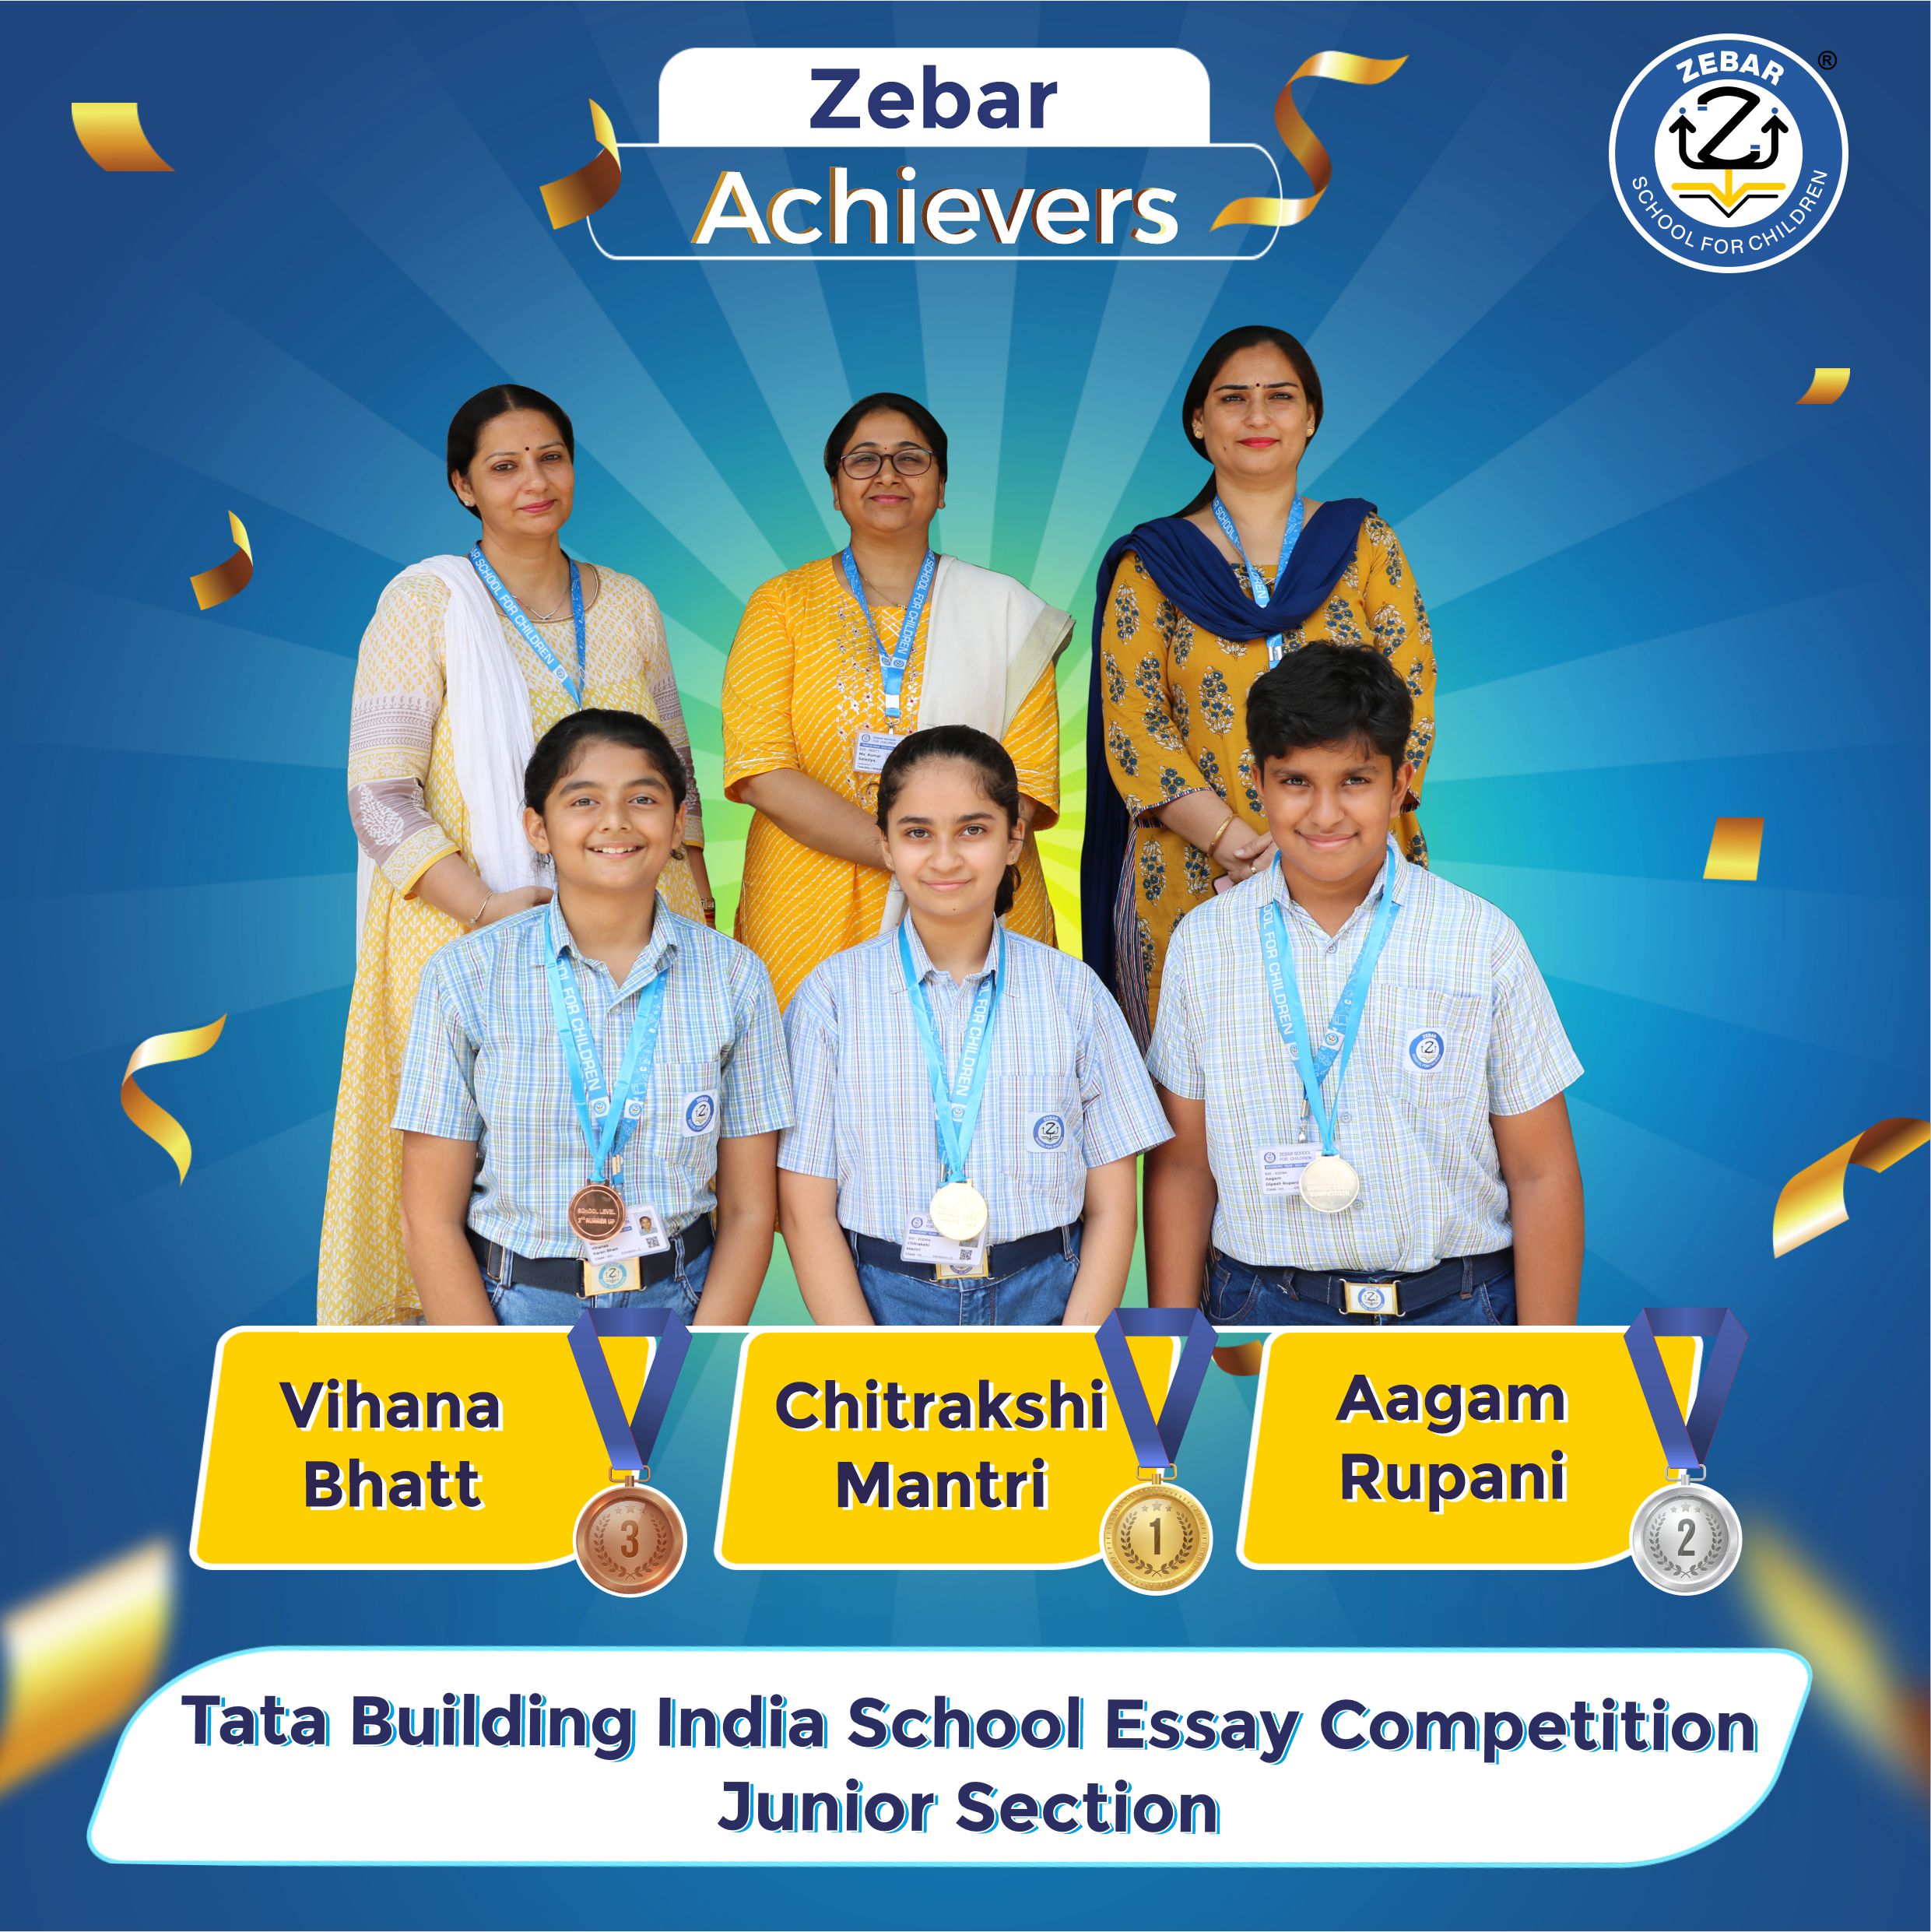 Tata Building India School Essay Competition Junior Section